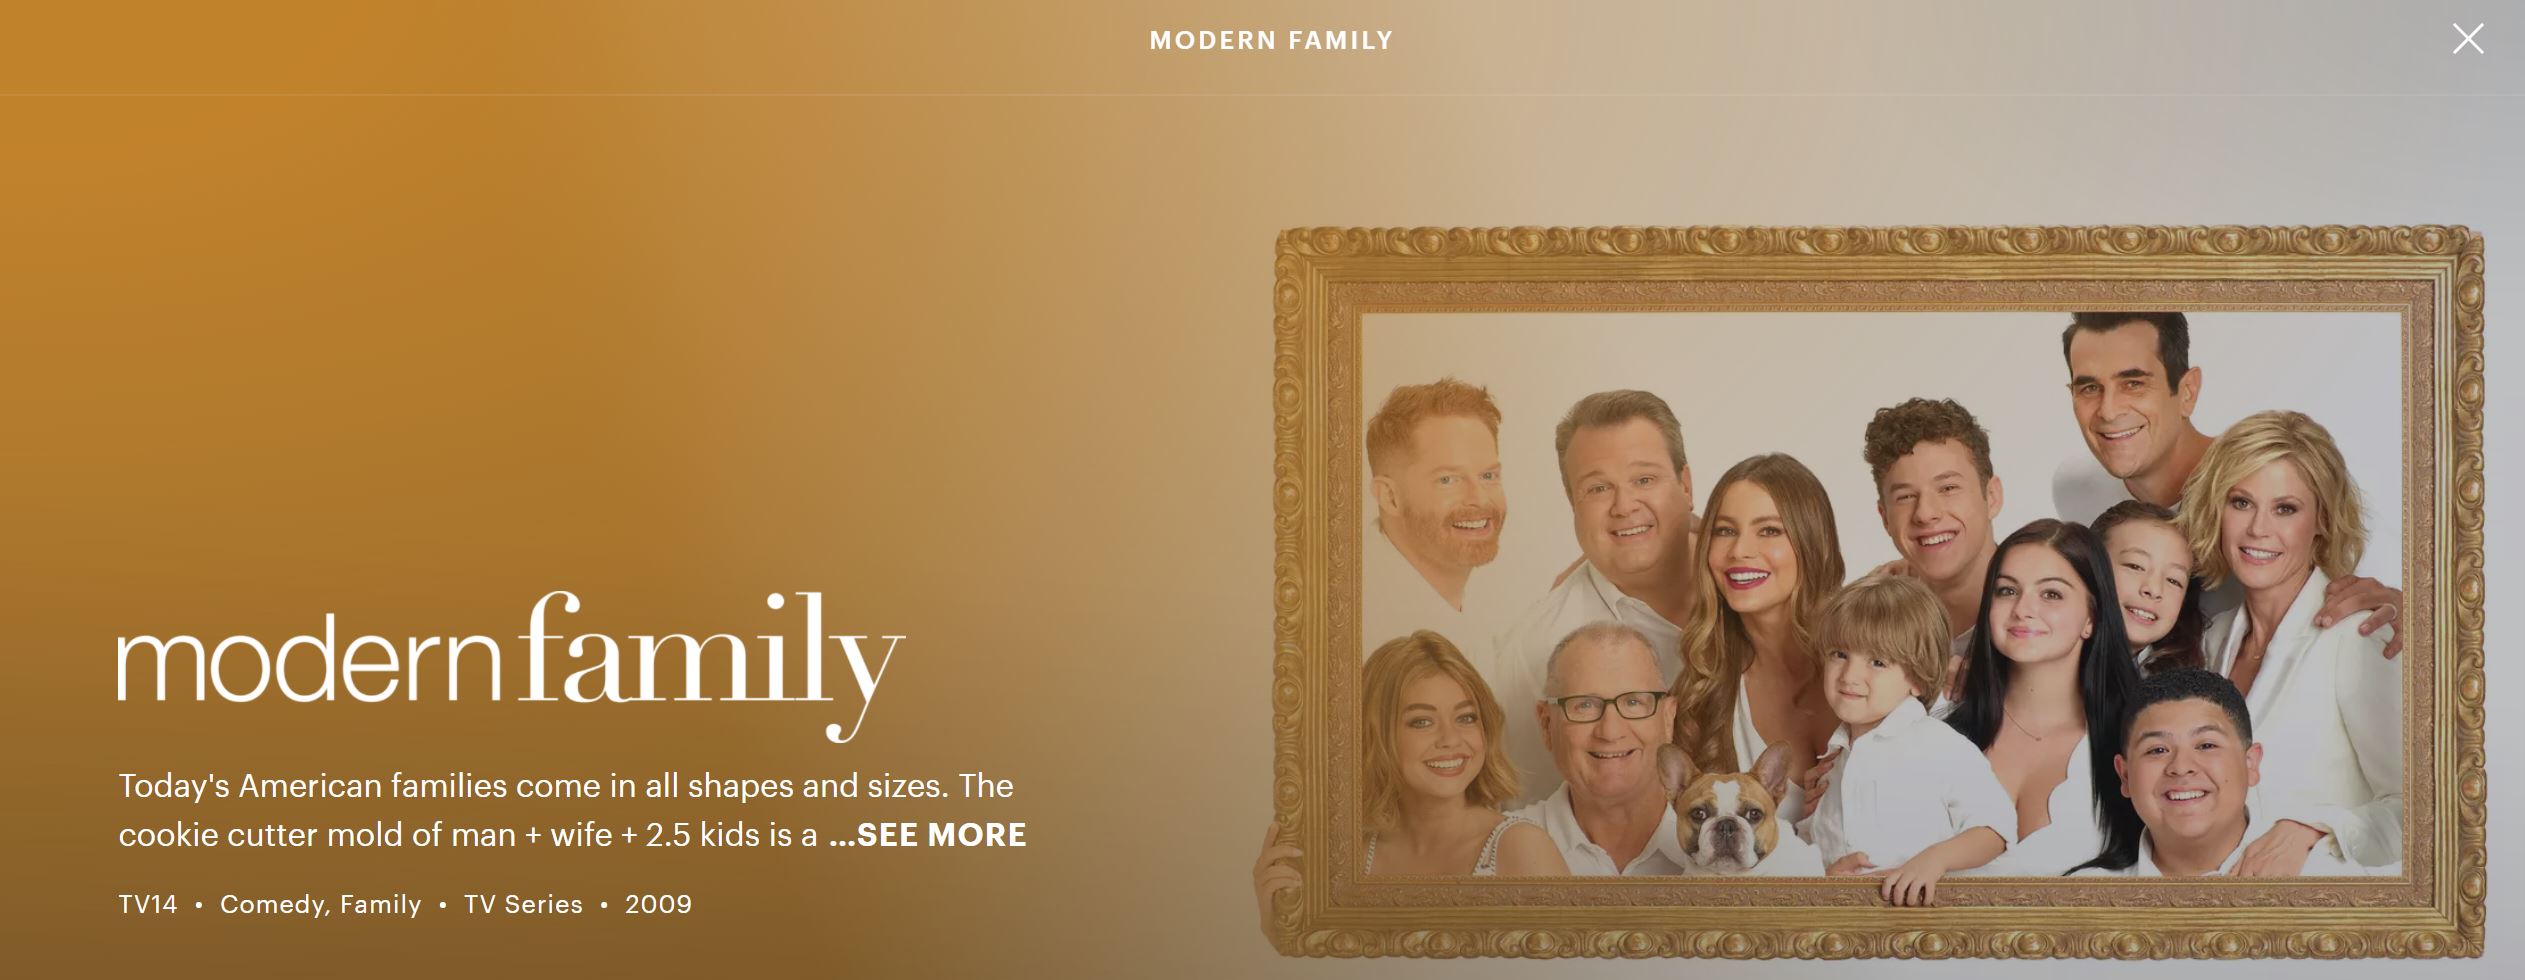 Watch modern family in UK Hulu